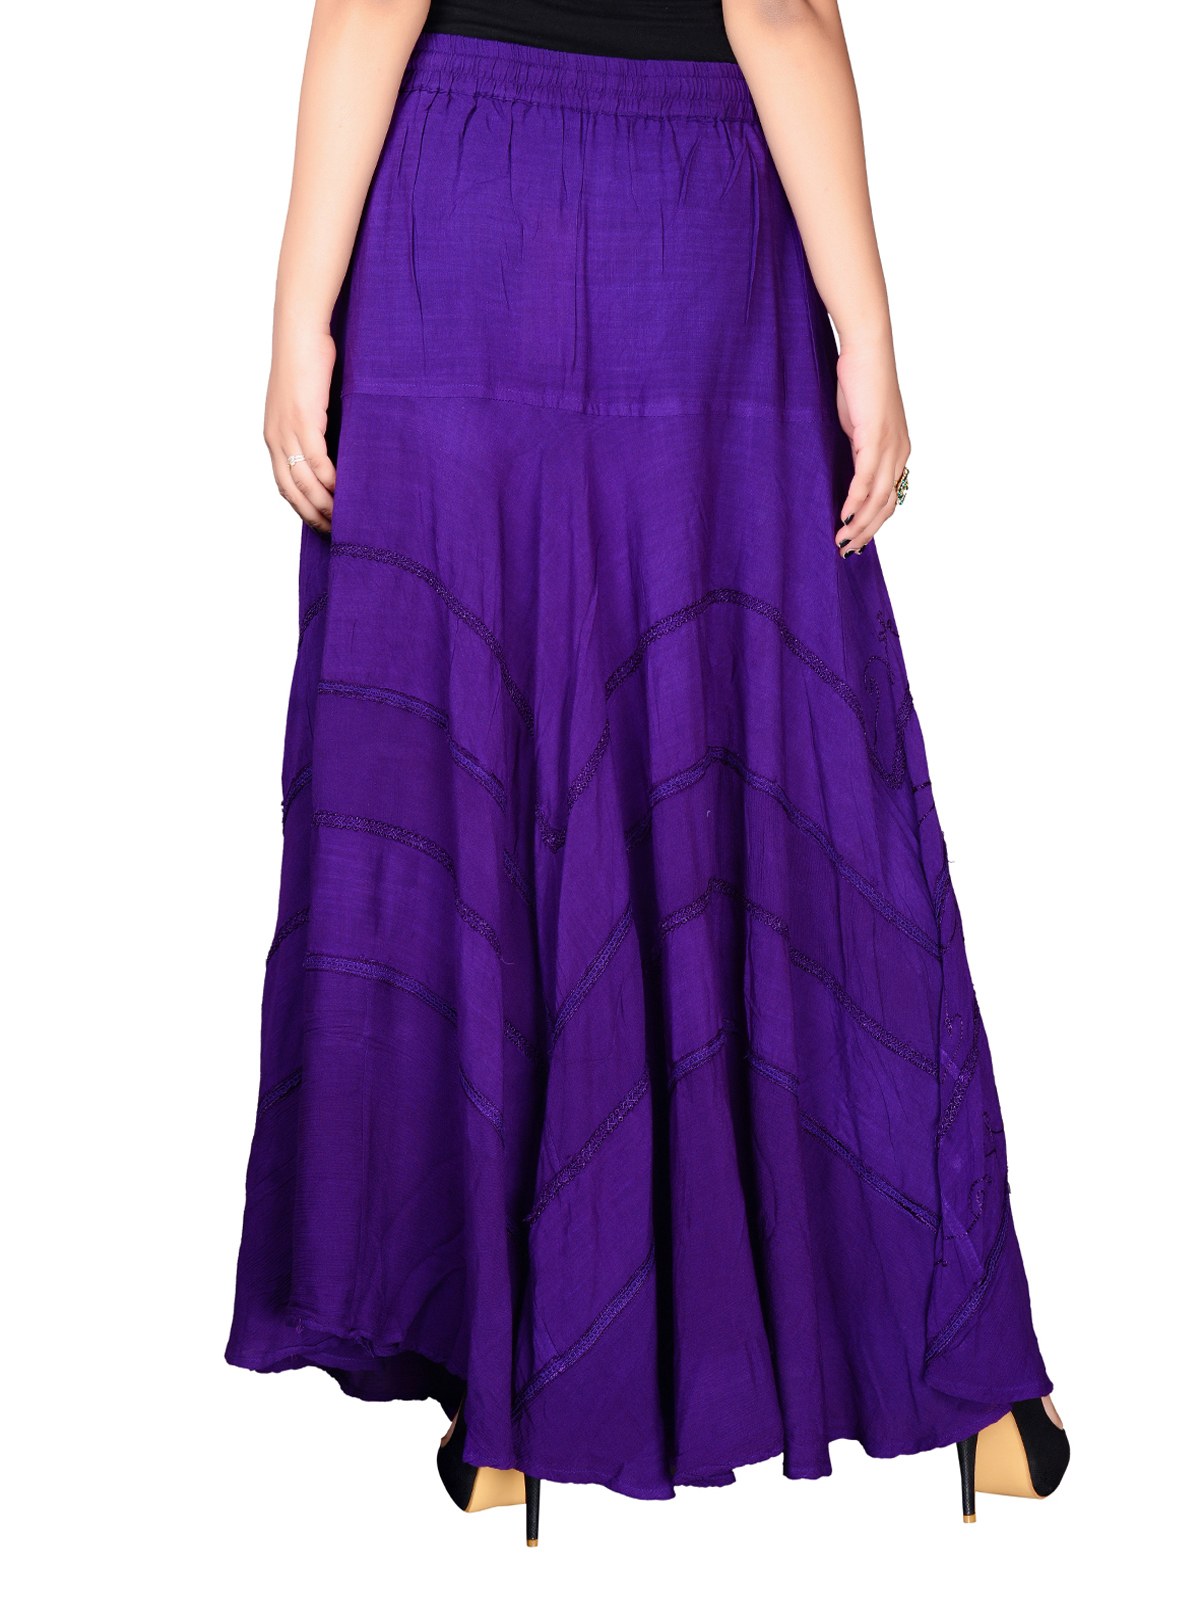 eaonplus DARK-PURPLE Wiccan Hem Gothic Skirt - Plus Size 18 to 34